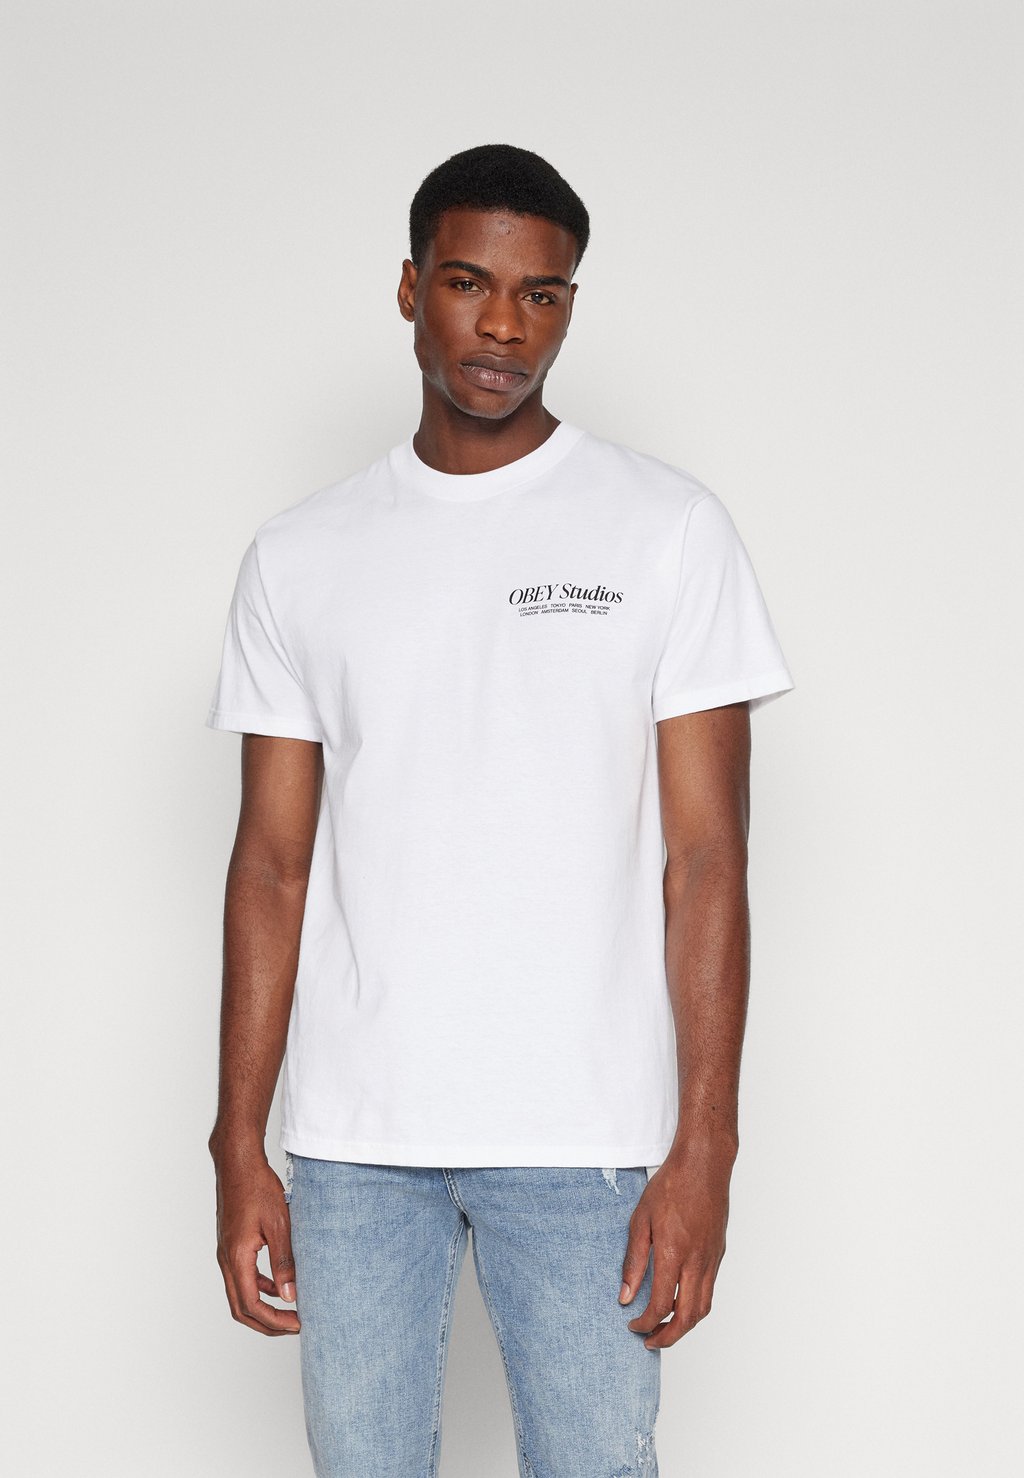 Футболка с принтом Studios Unisex Obey Clothing, белый футболка с принтом icon split unisex obey clothing цвет black